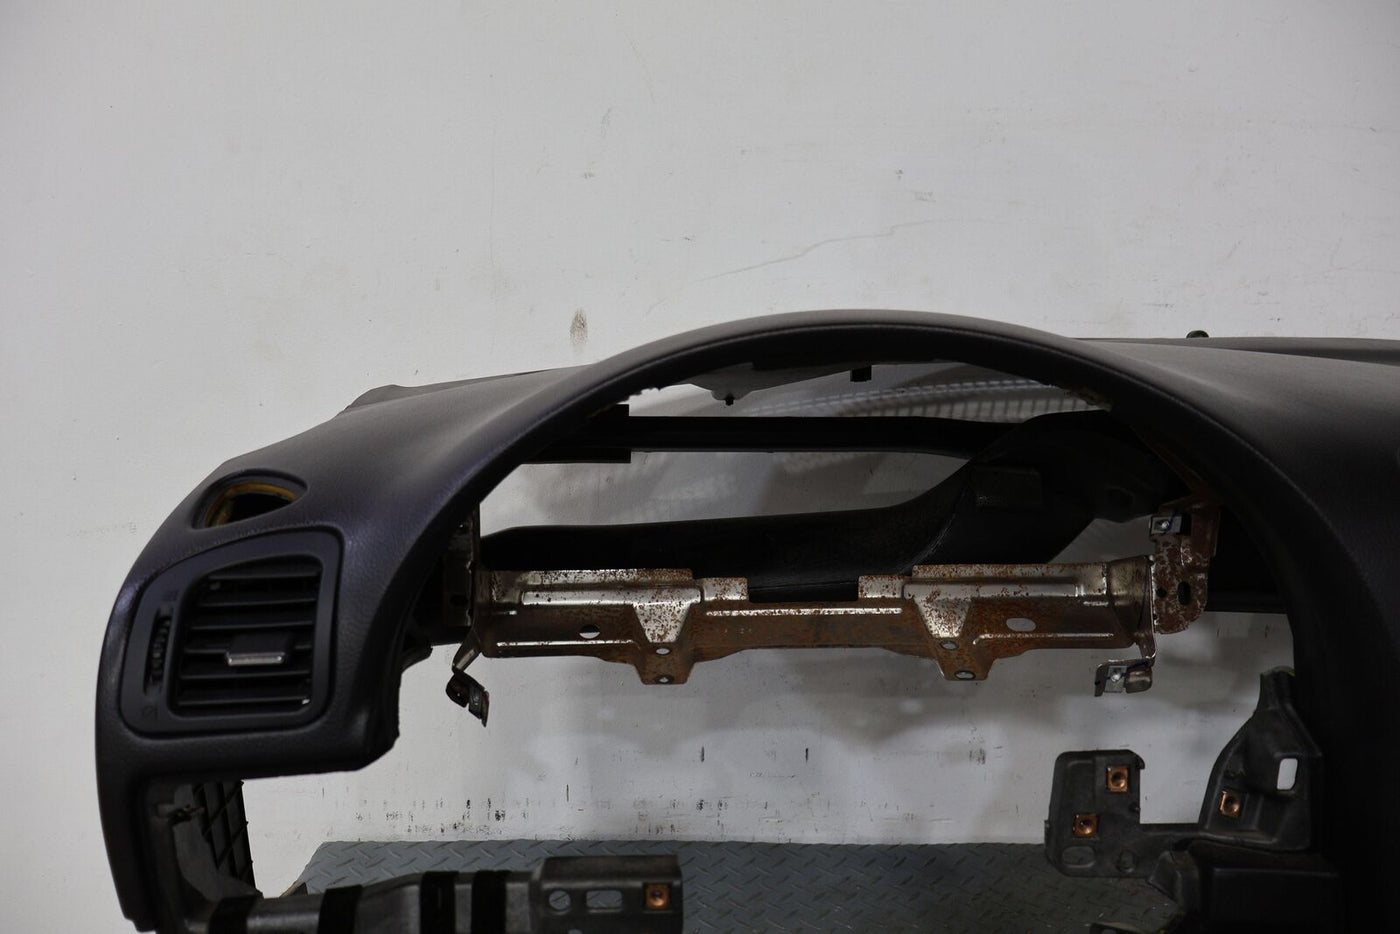 02-05 Ford Thunderbird OEM Bare Interior Dash Dashboard (Black BW) Mild Wear